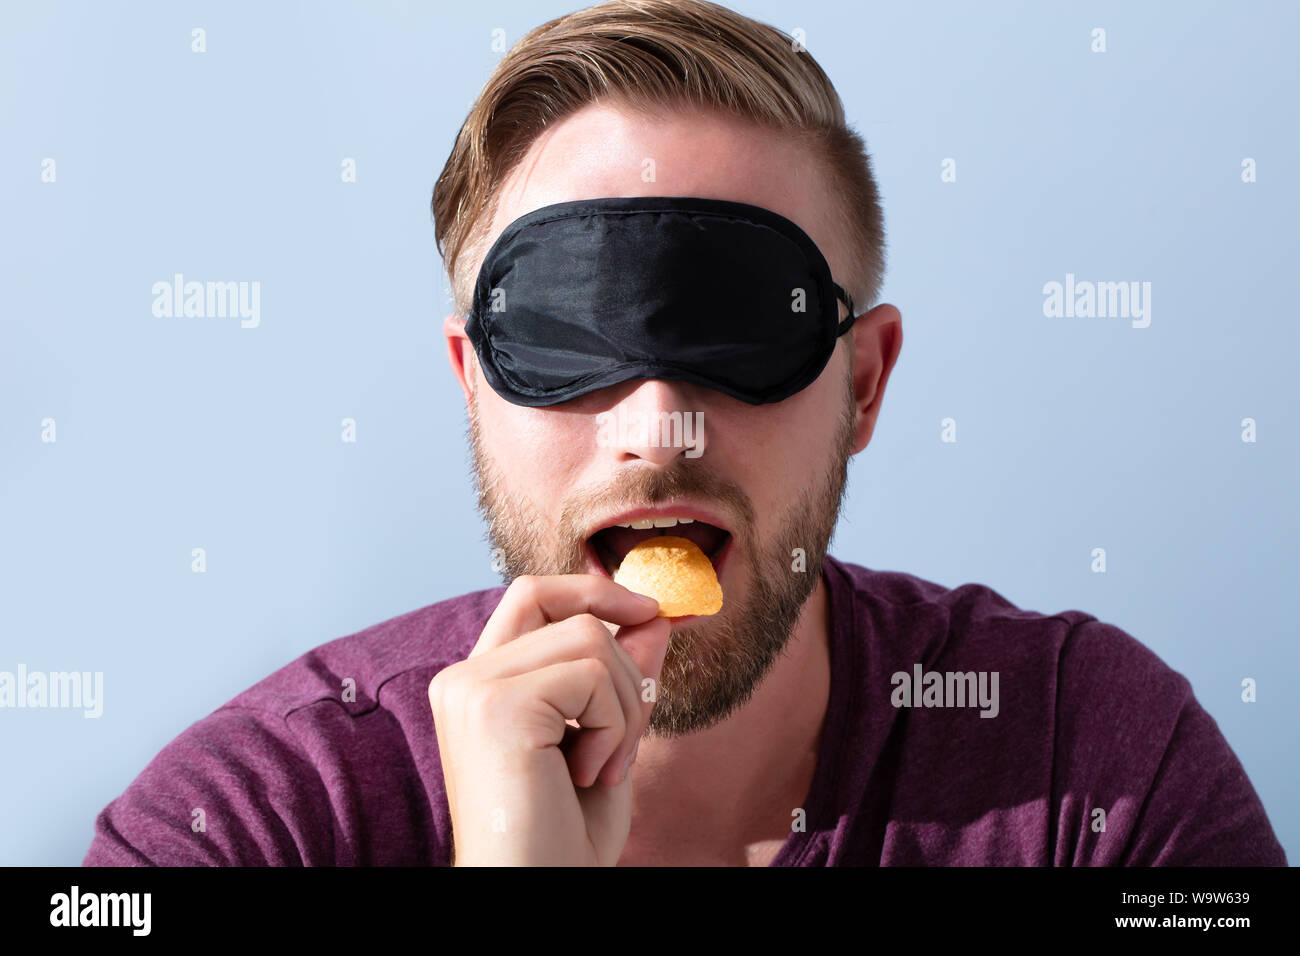 Blindfolded elegant man Stock Photo by ©brasoveanub 44815667